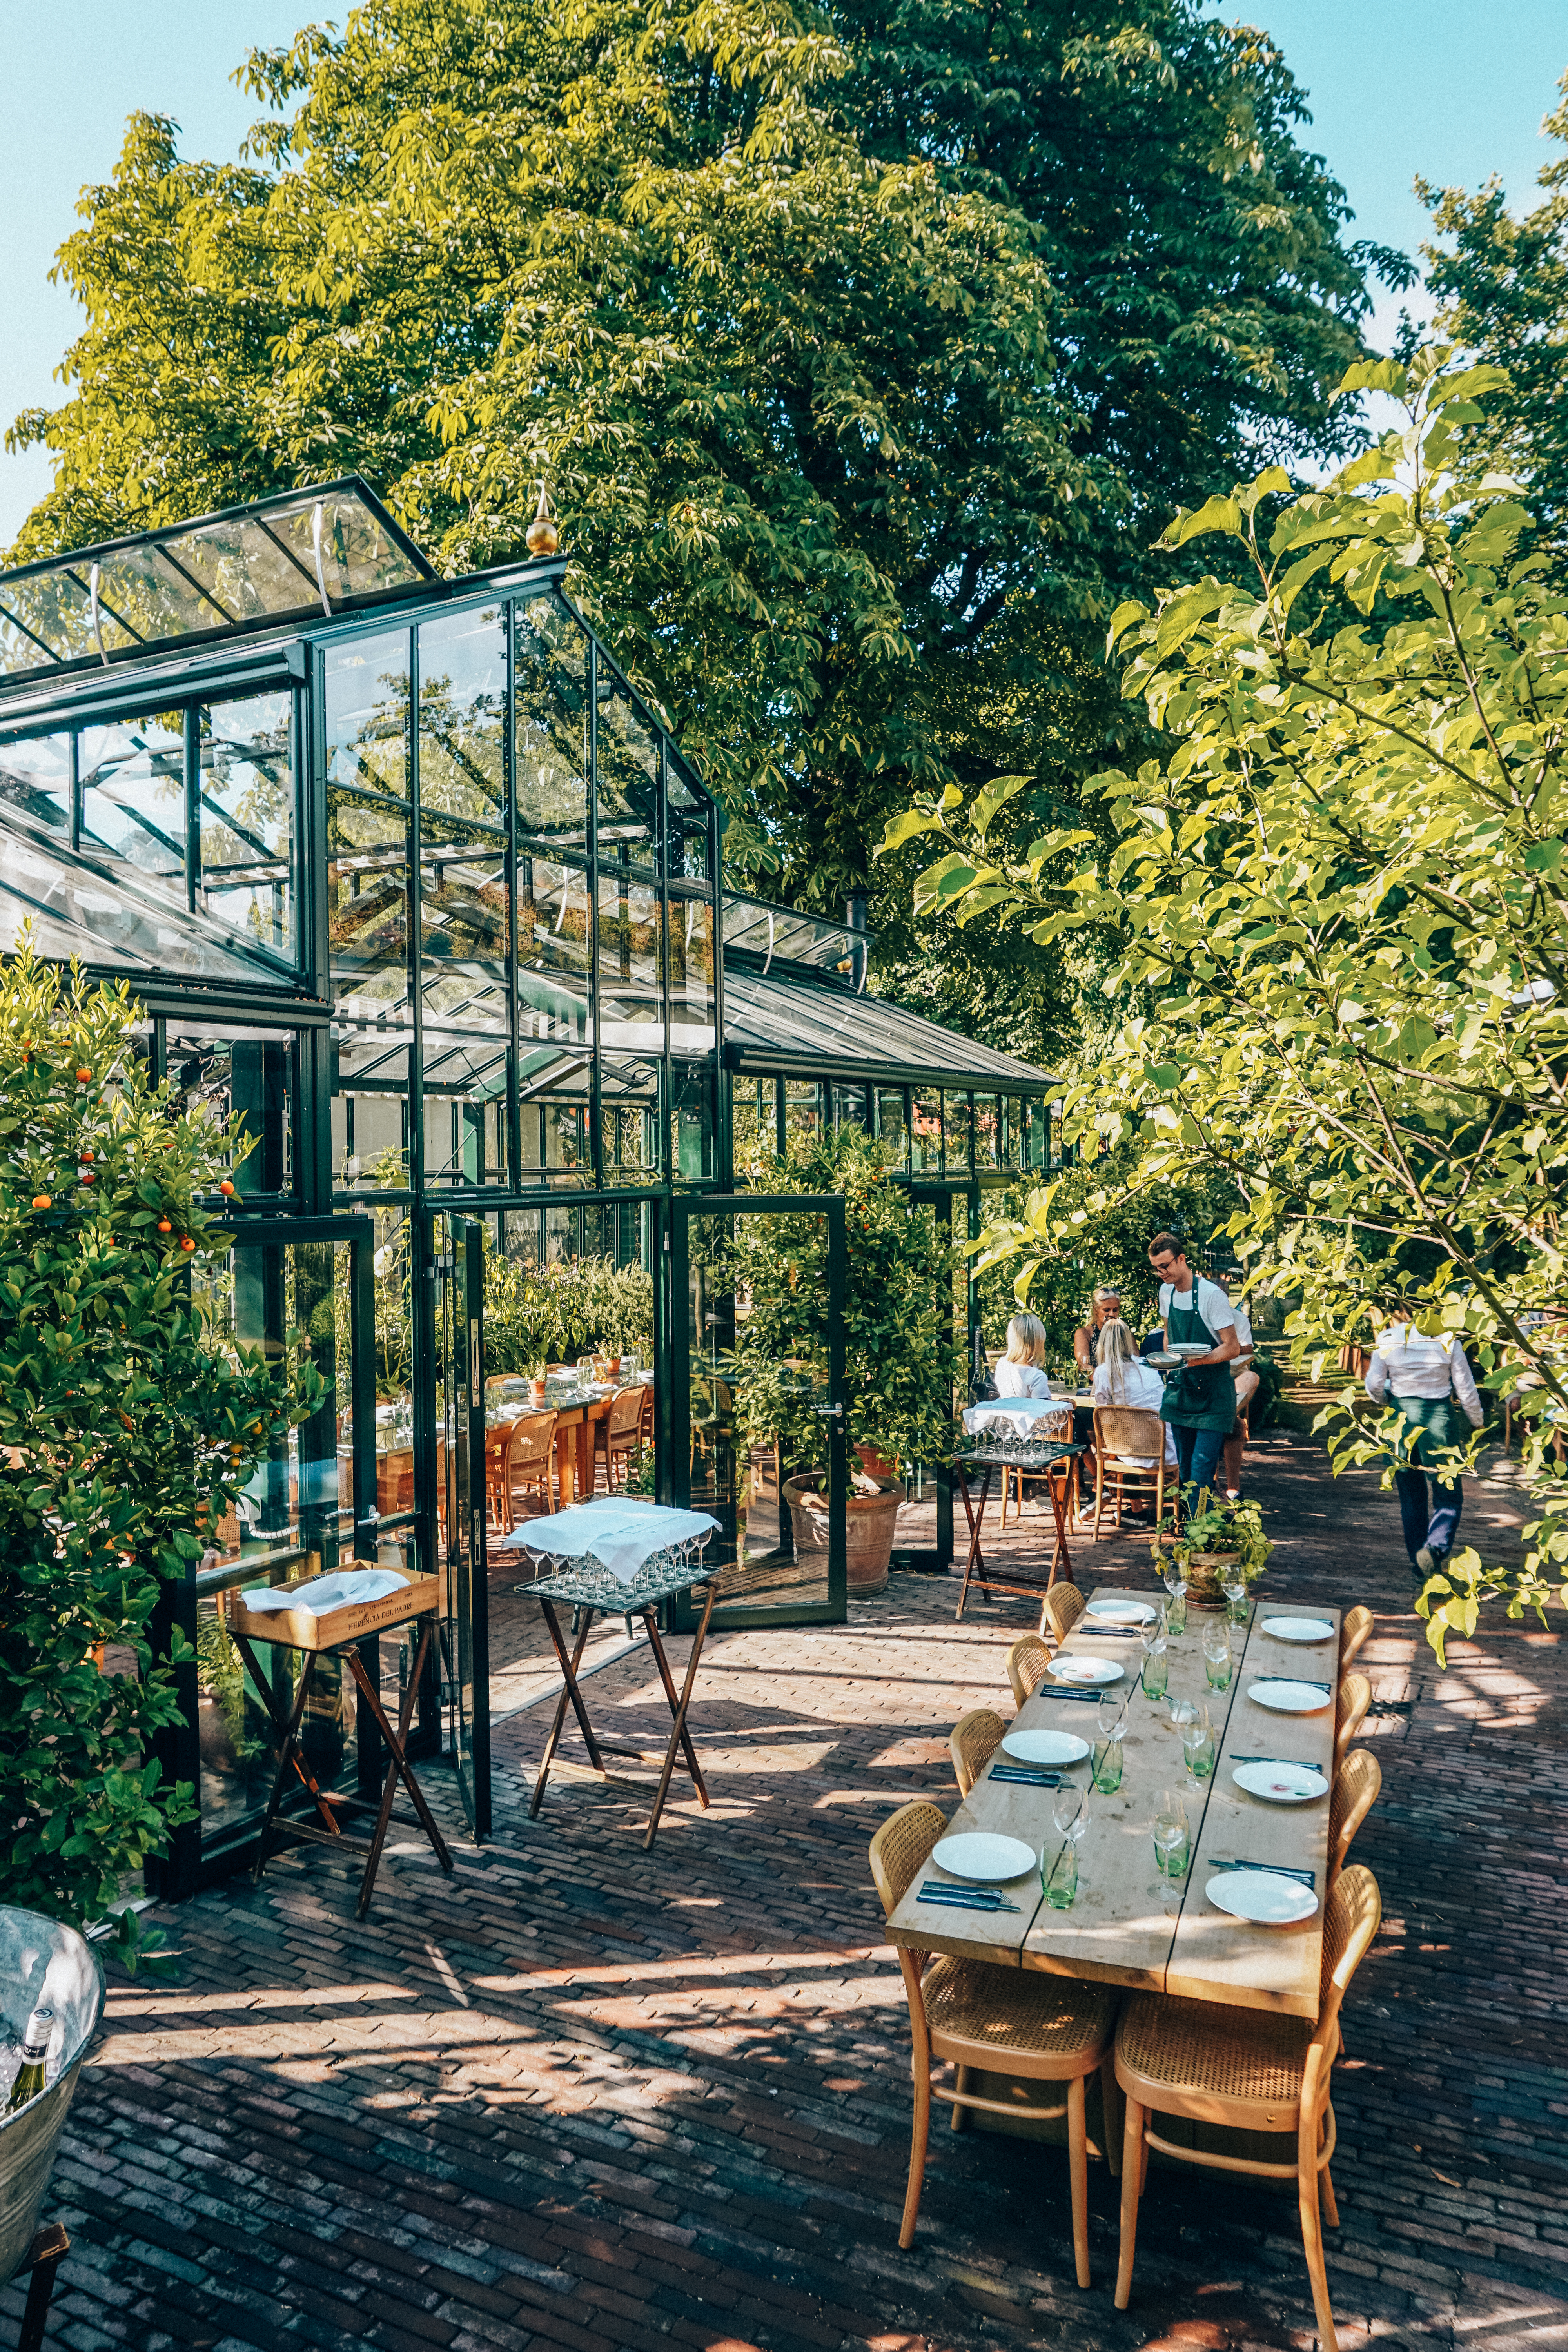 A stunning green house restaurant in Tivoli Gardens in Copenhagen 